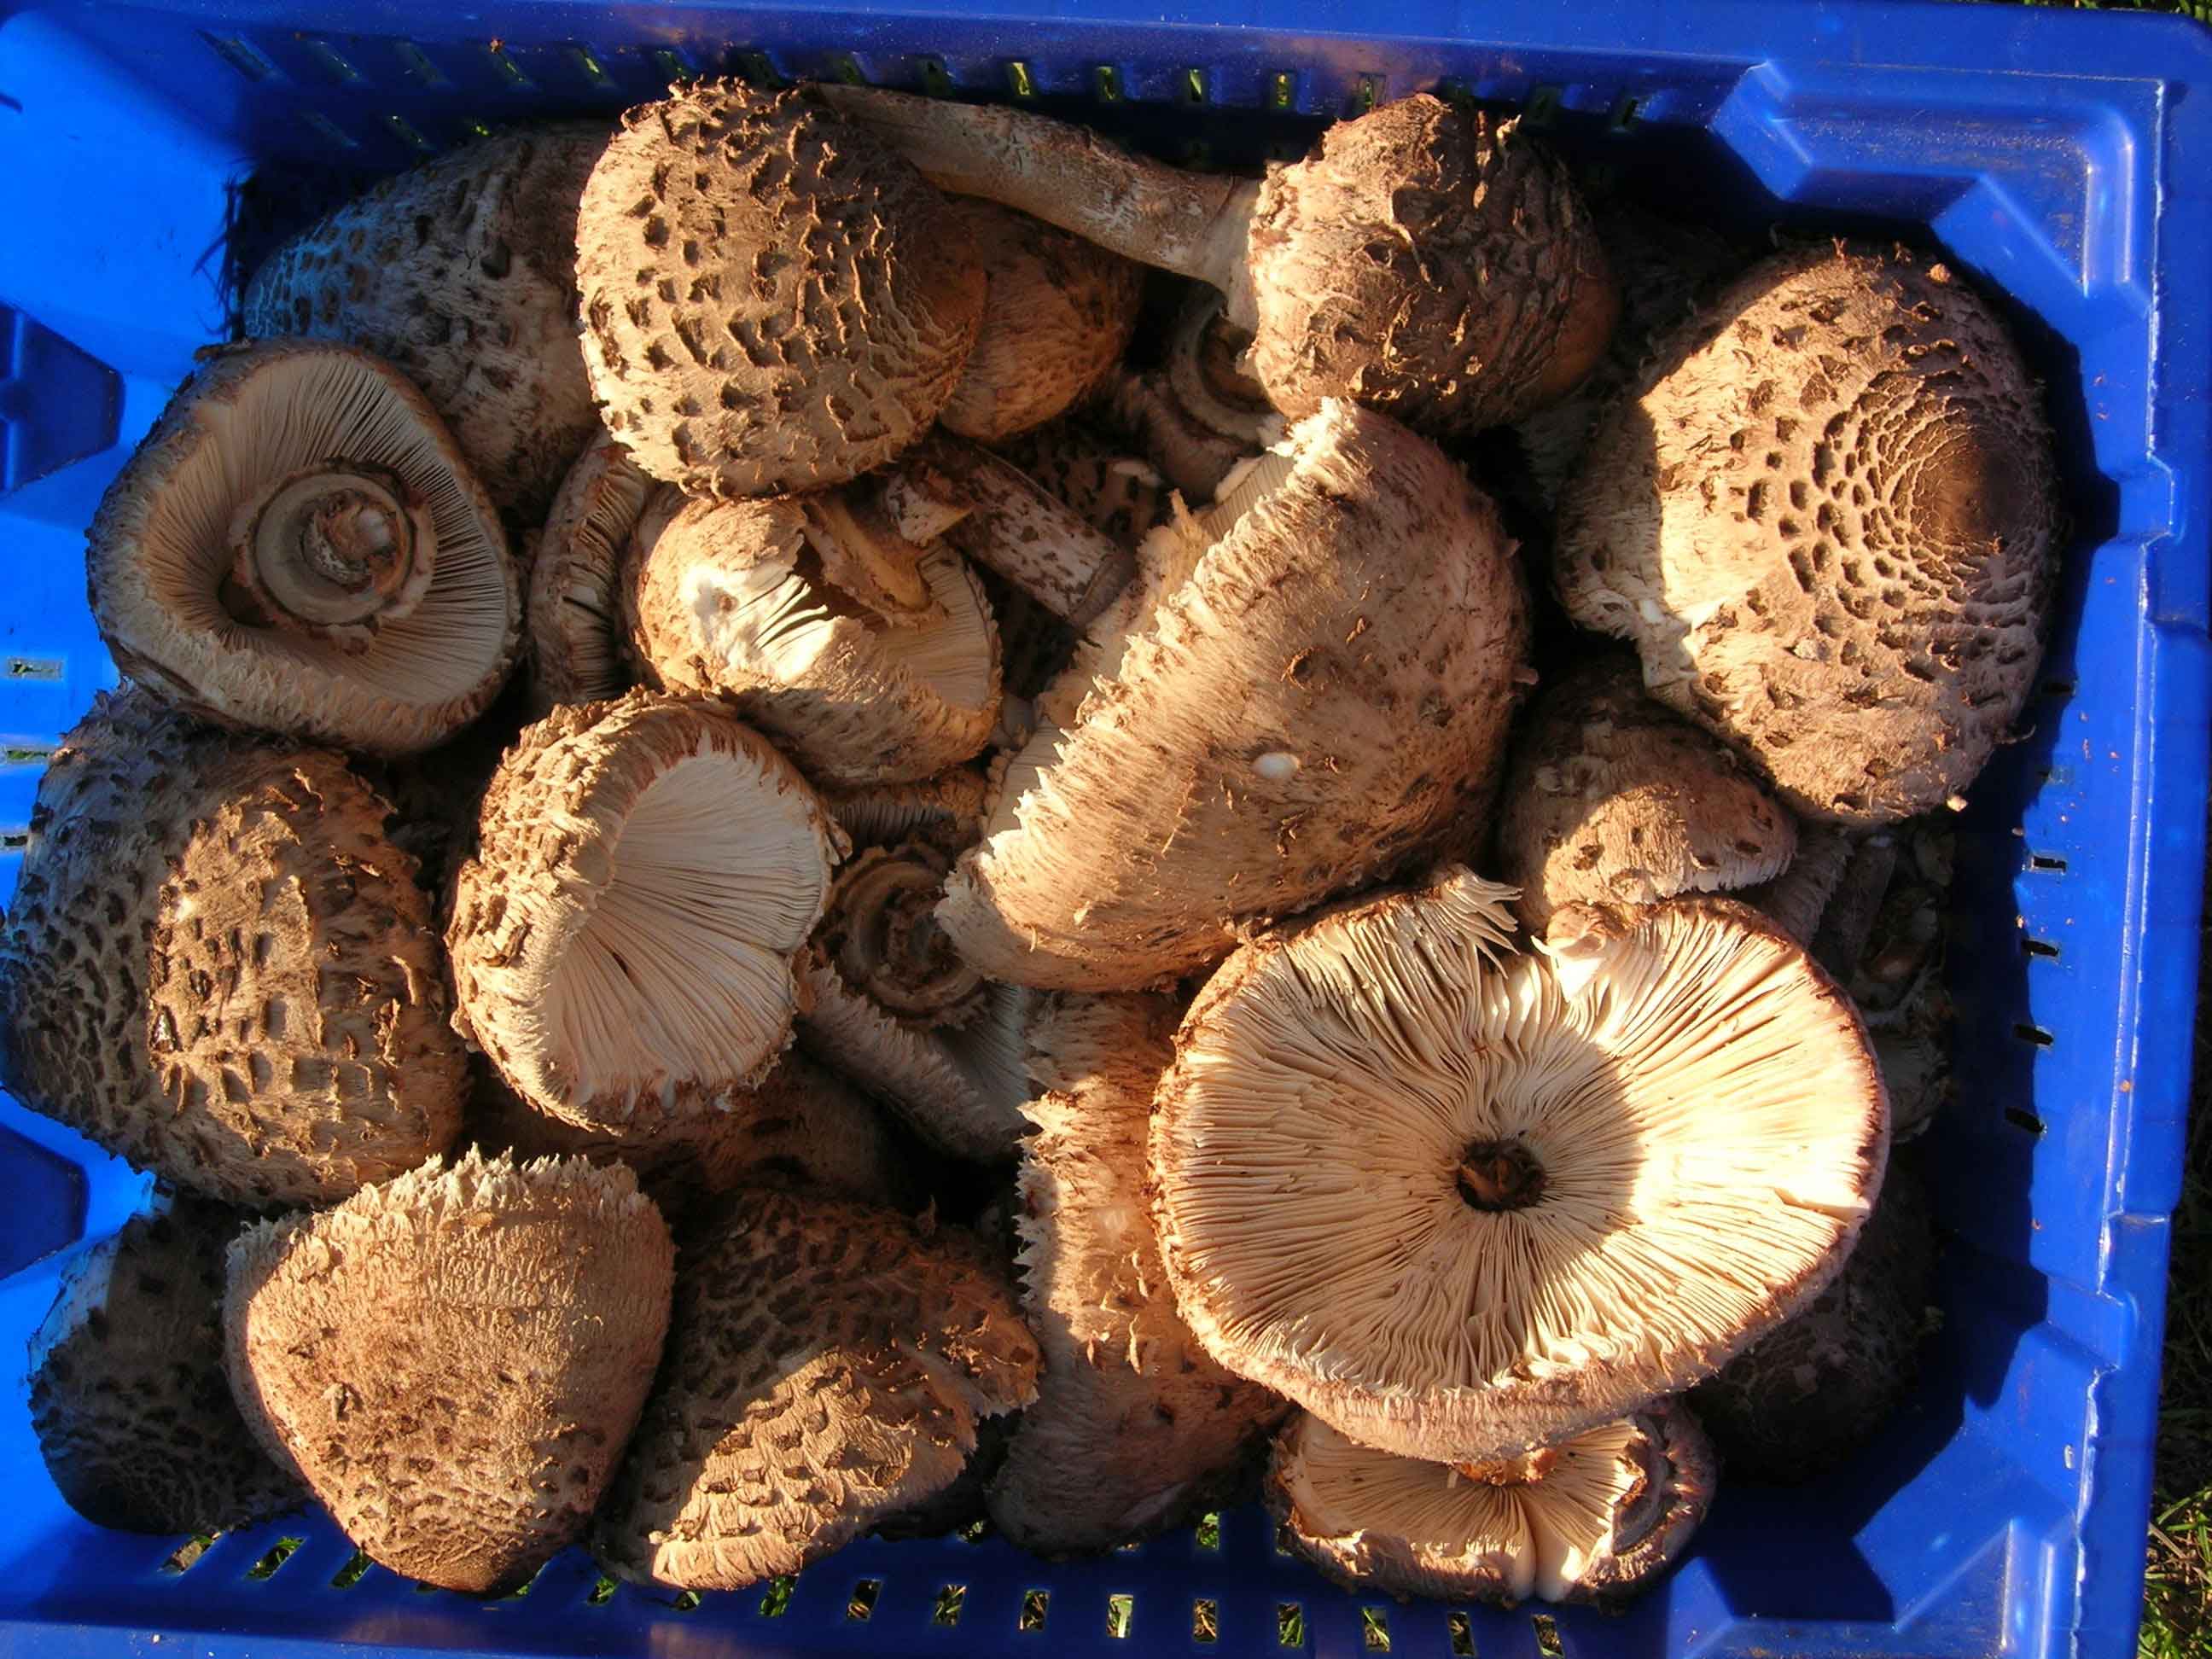 Shaggy Parasol Mushroom Recipes